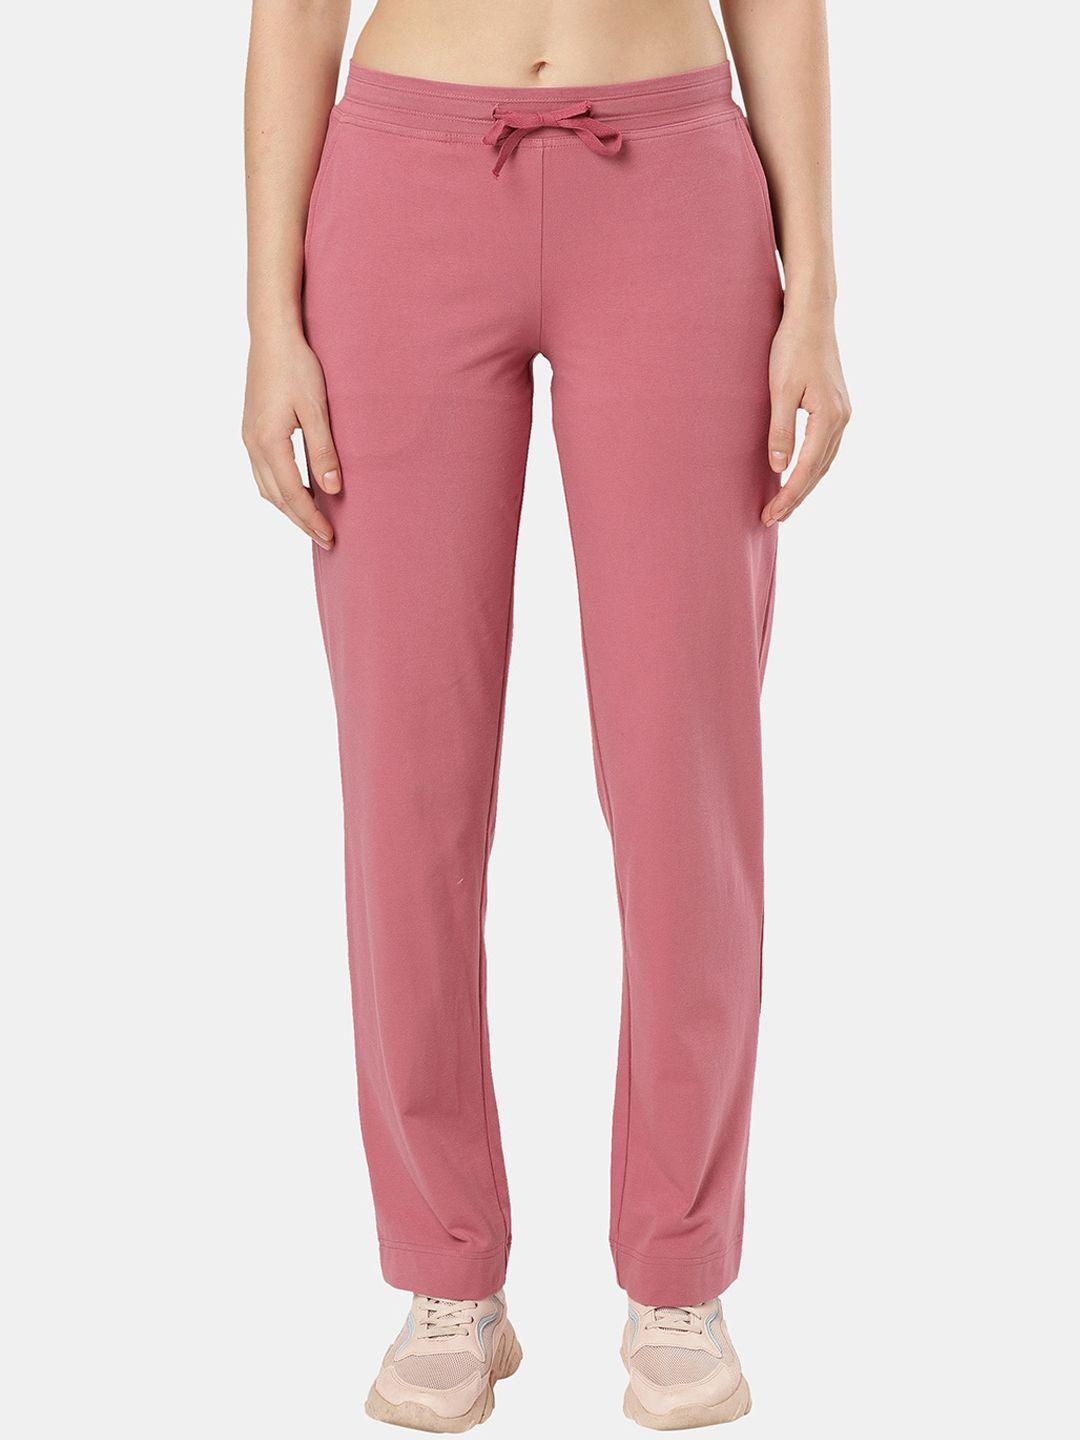 jockey women pink solid cotton track pants